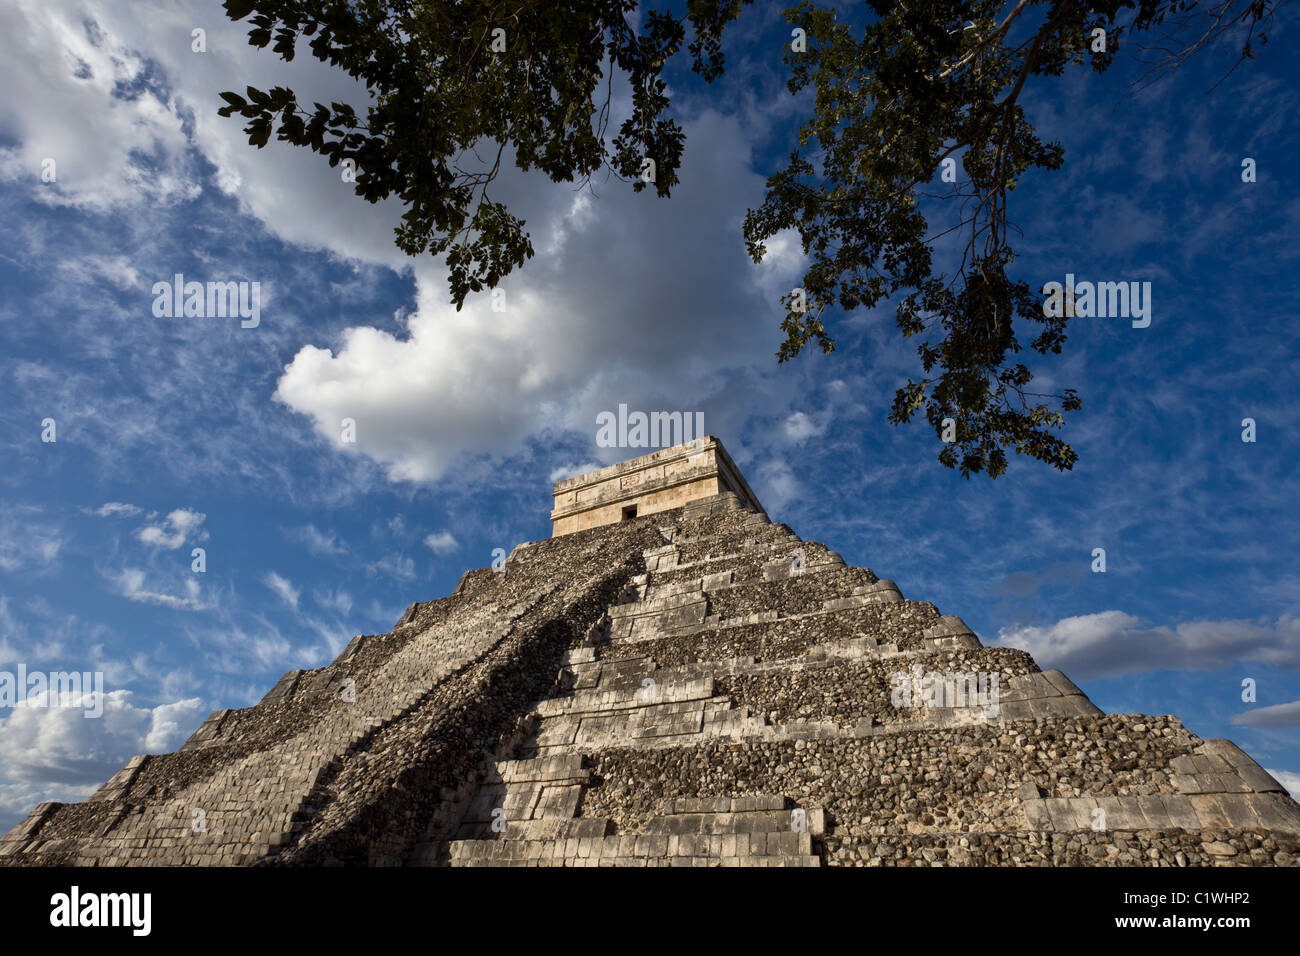 The Kukulkan Pyramid  or “El Castillo”, one of the new seven wonders of the world, in Chichen Itza, Yucatan Peninsula, Mexco. Stock Photo